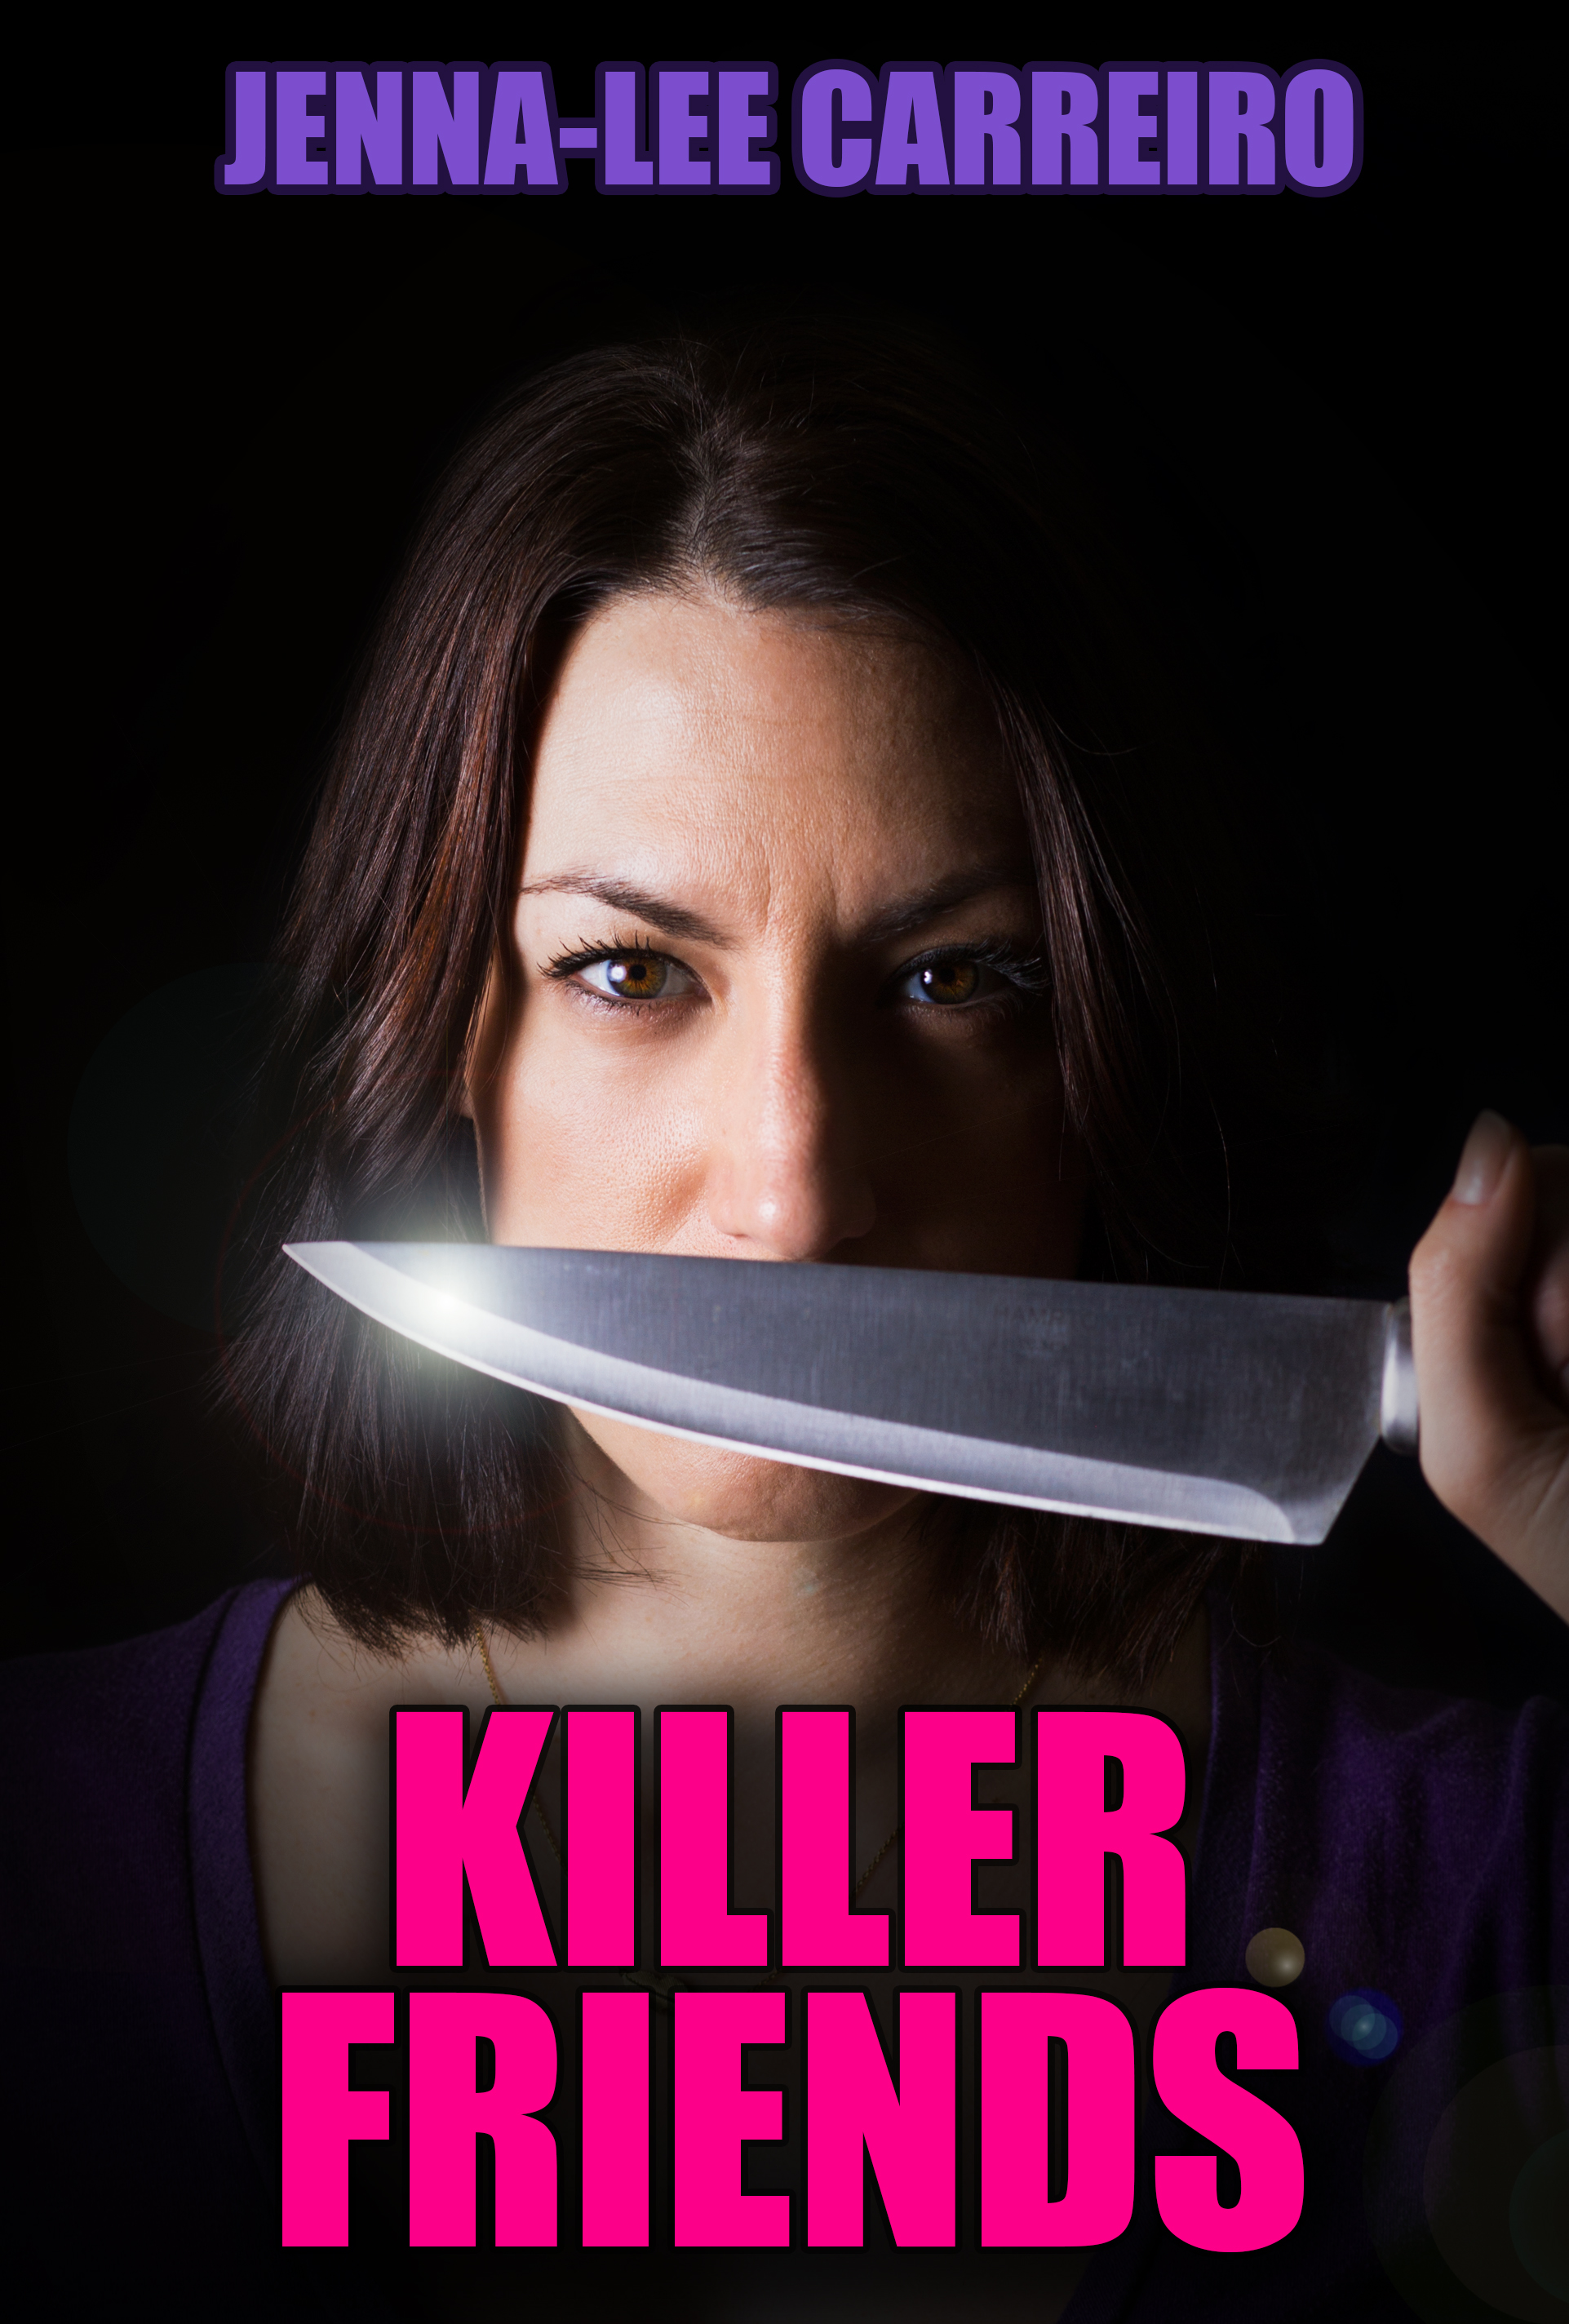 Killer Friends poster